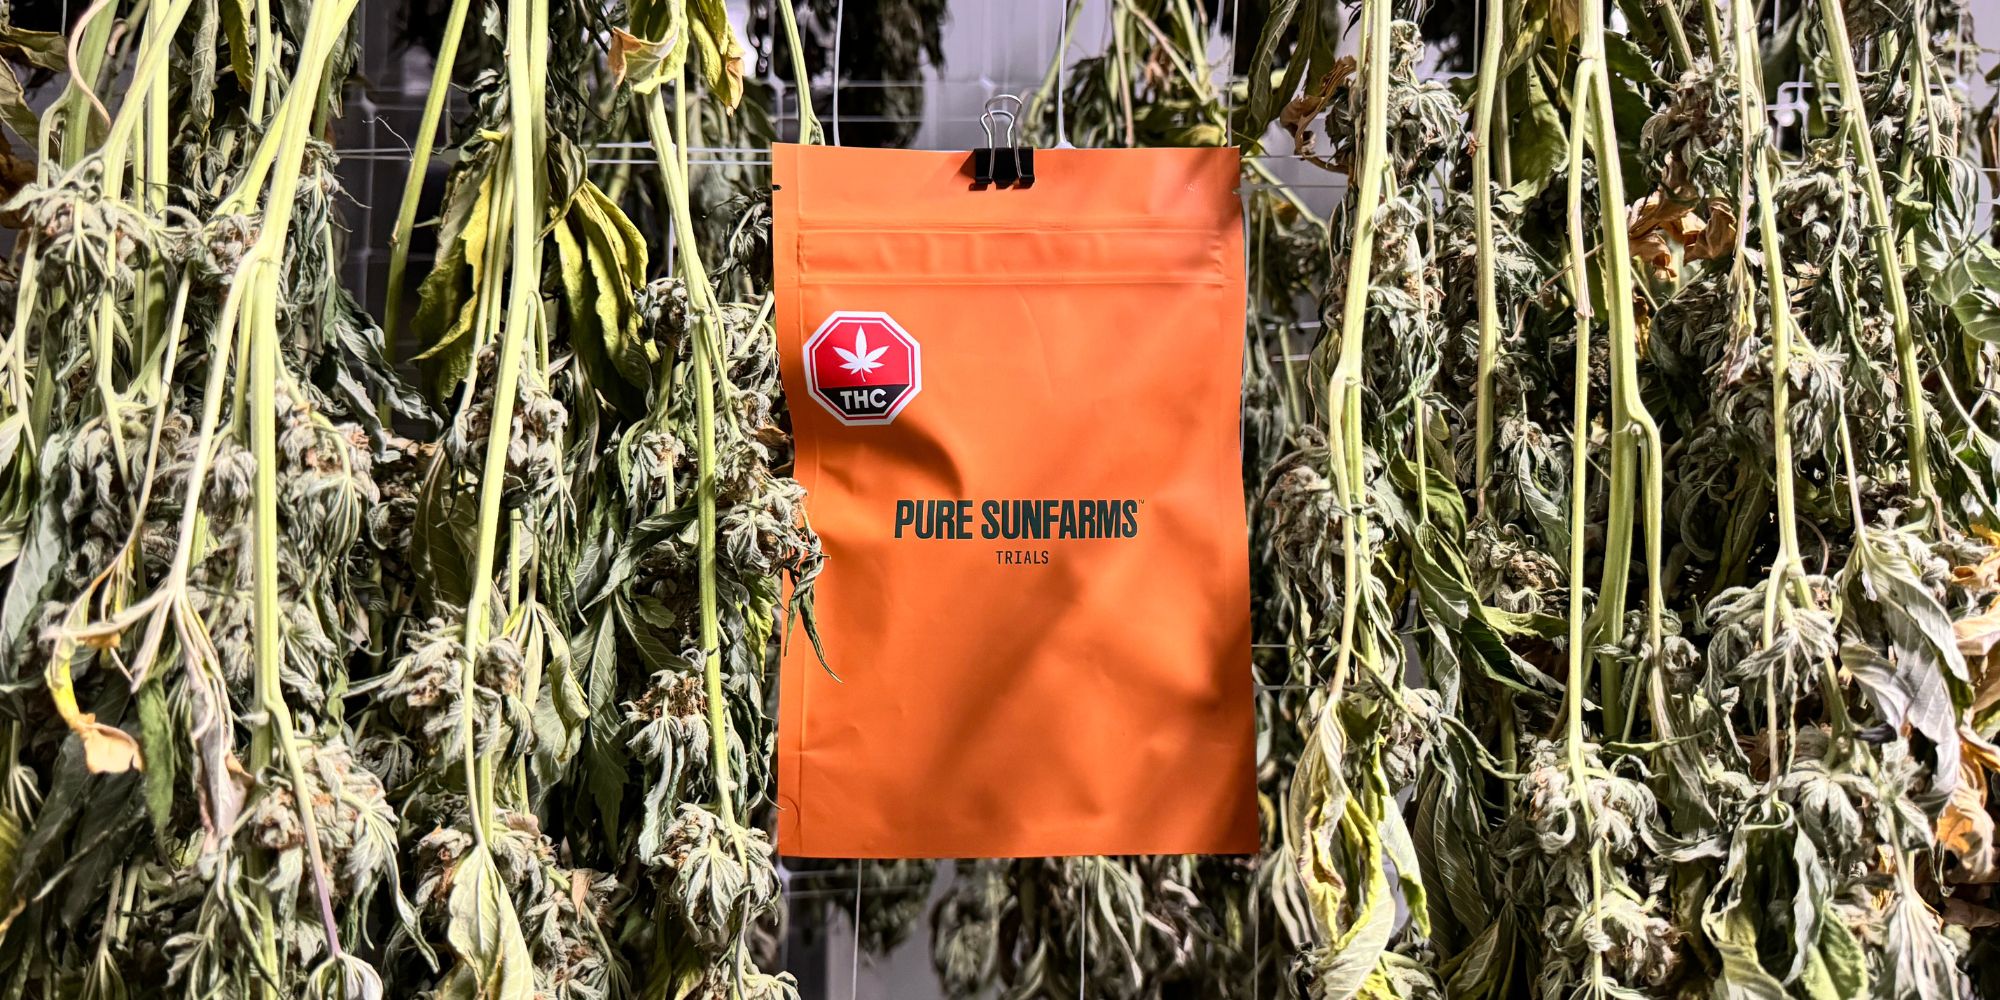 Pure Sunfarms launches grower-led Trials program